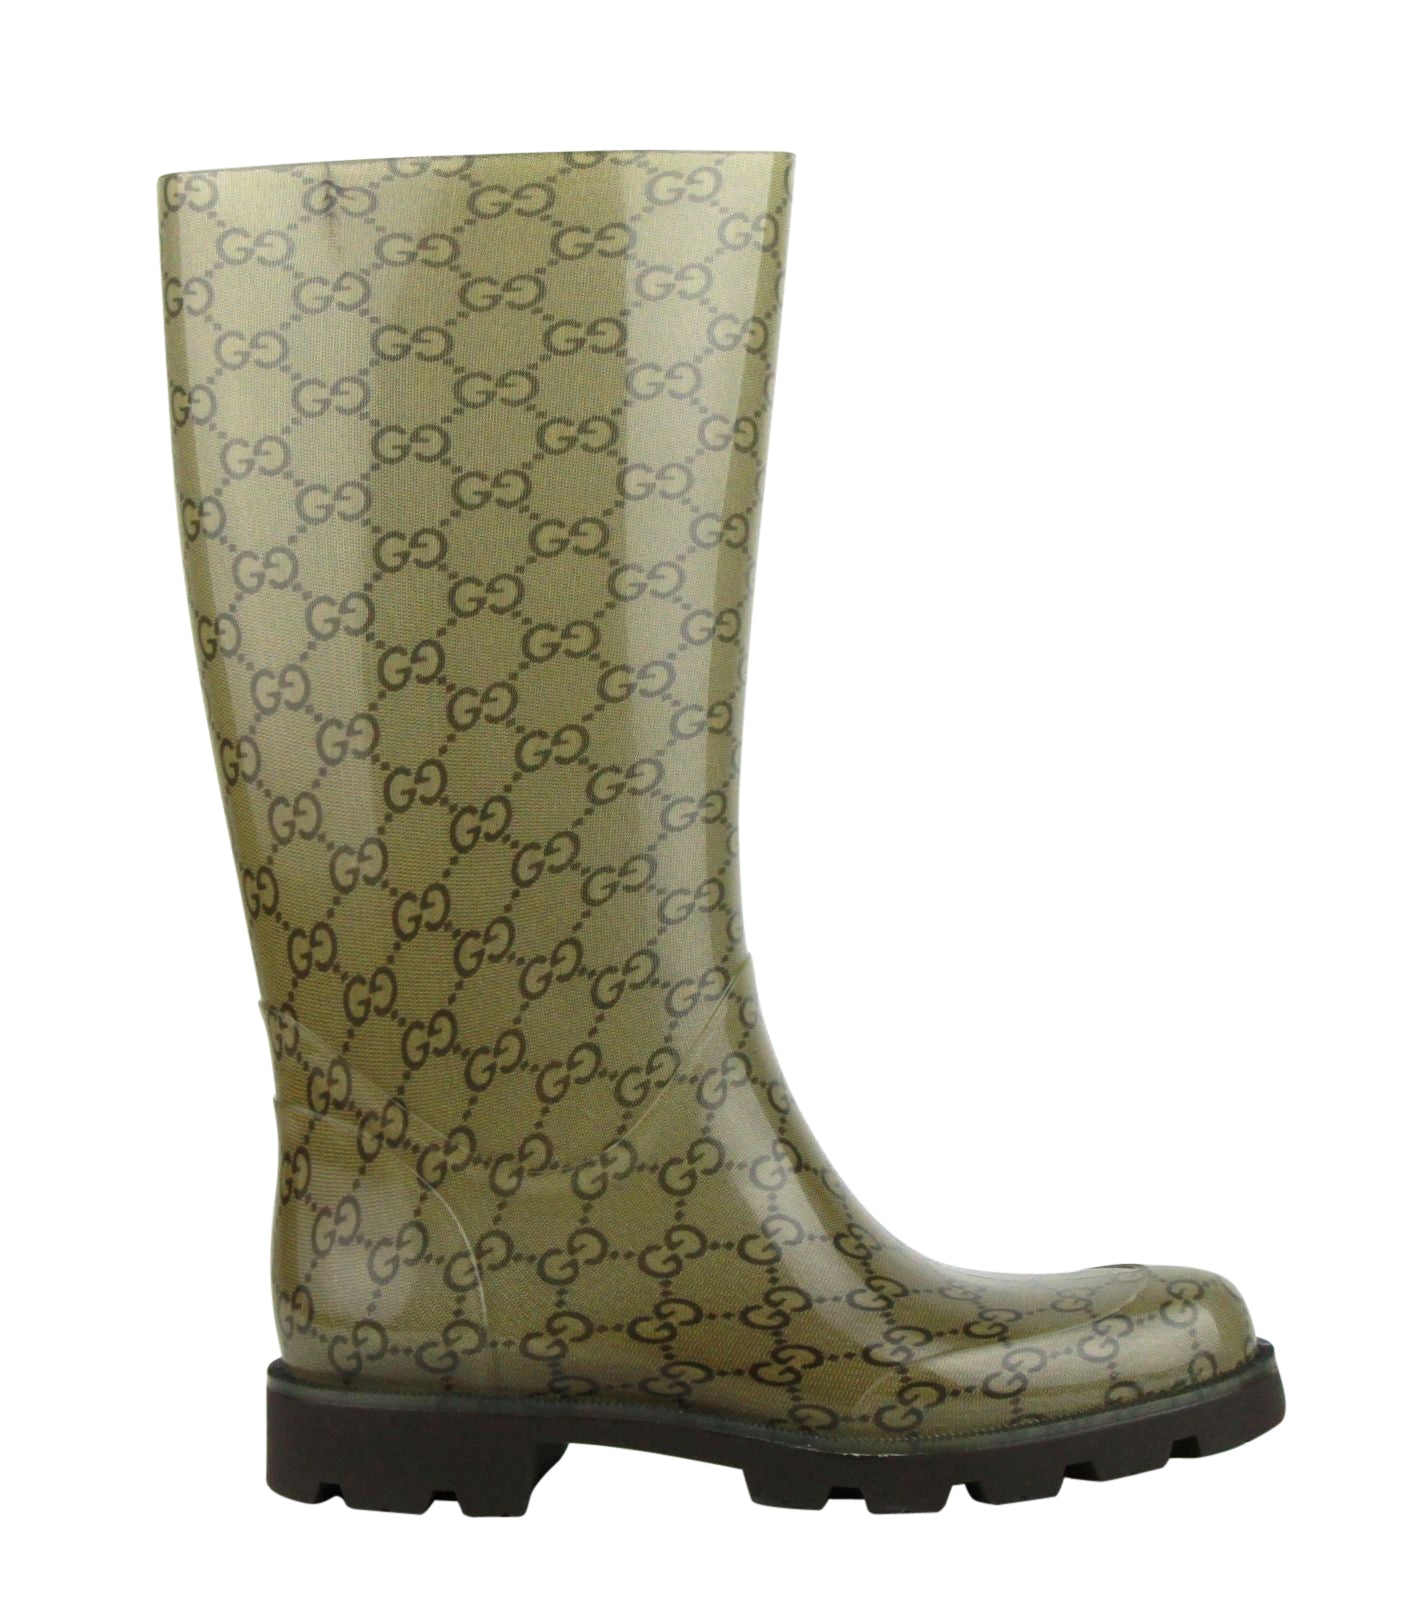 Shop GUCCI Rubber Sole Rain Boots Boots by TrendShop84